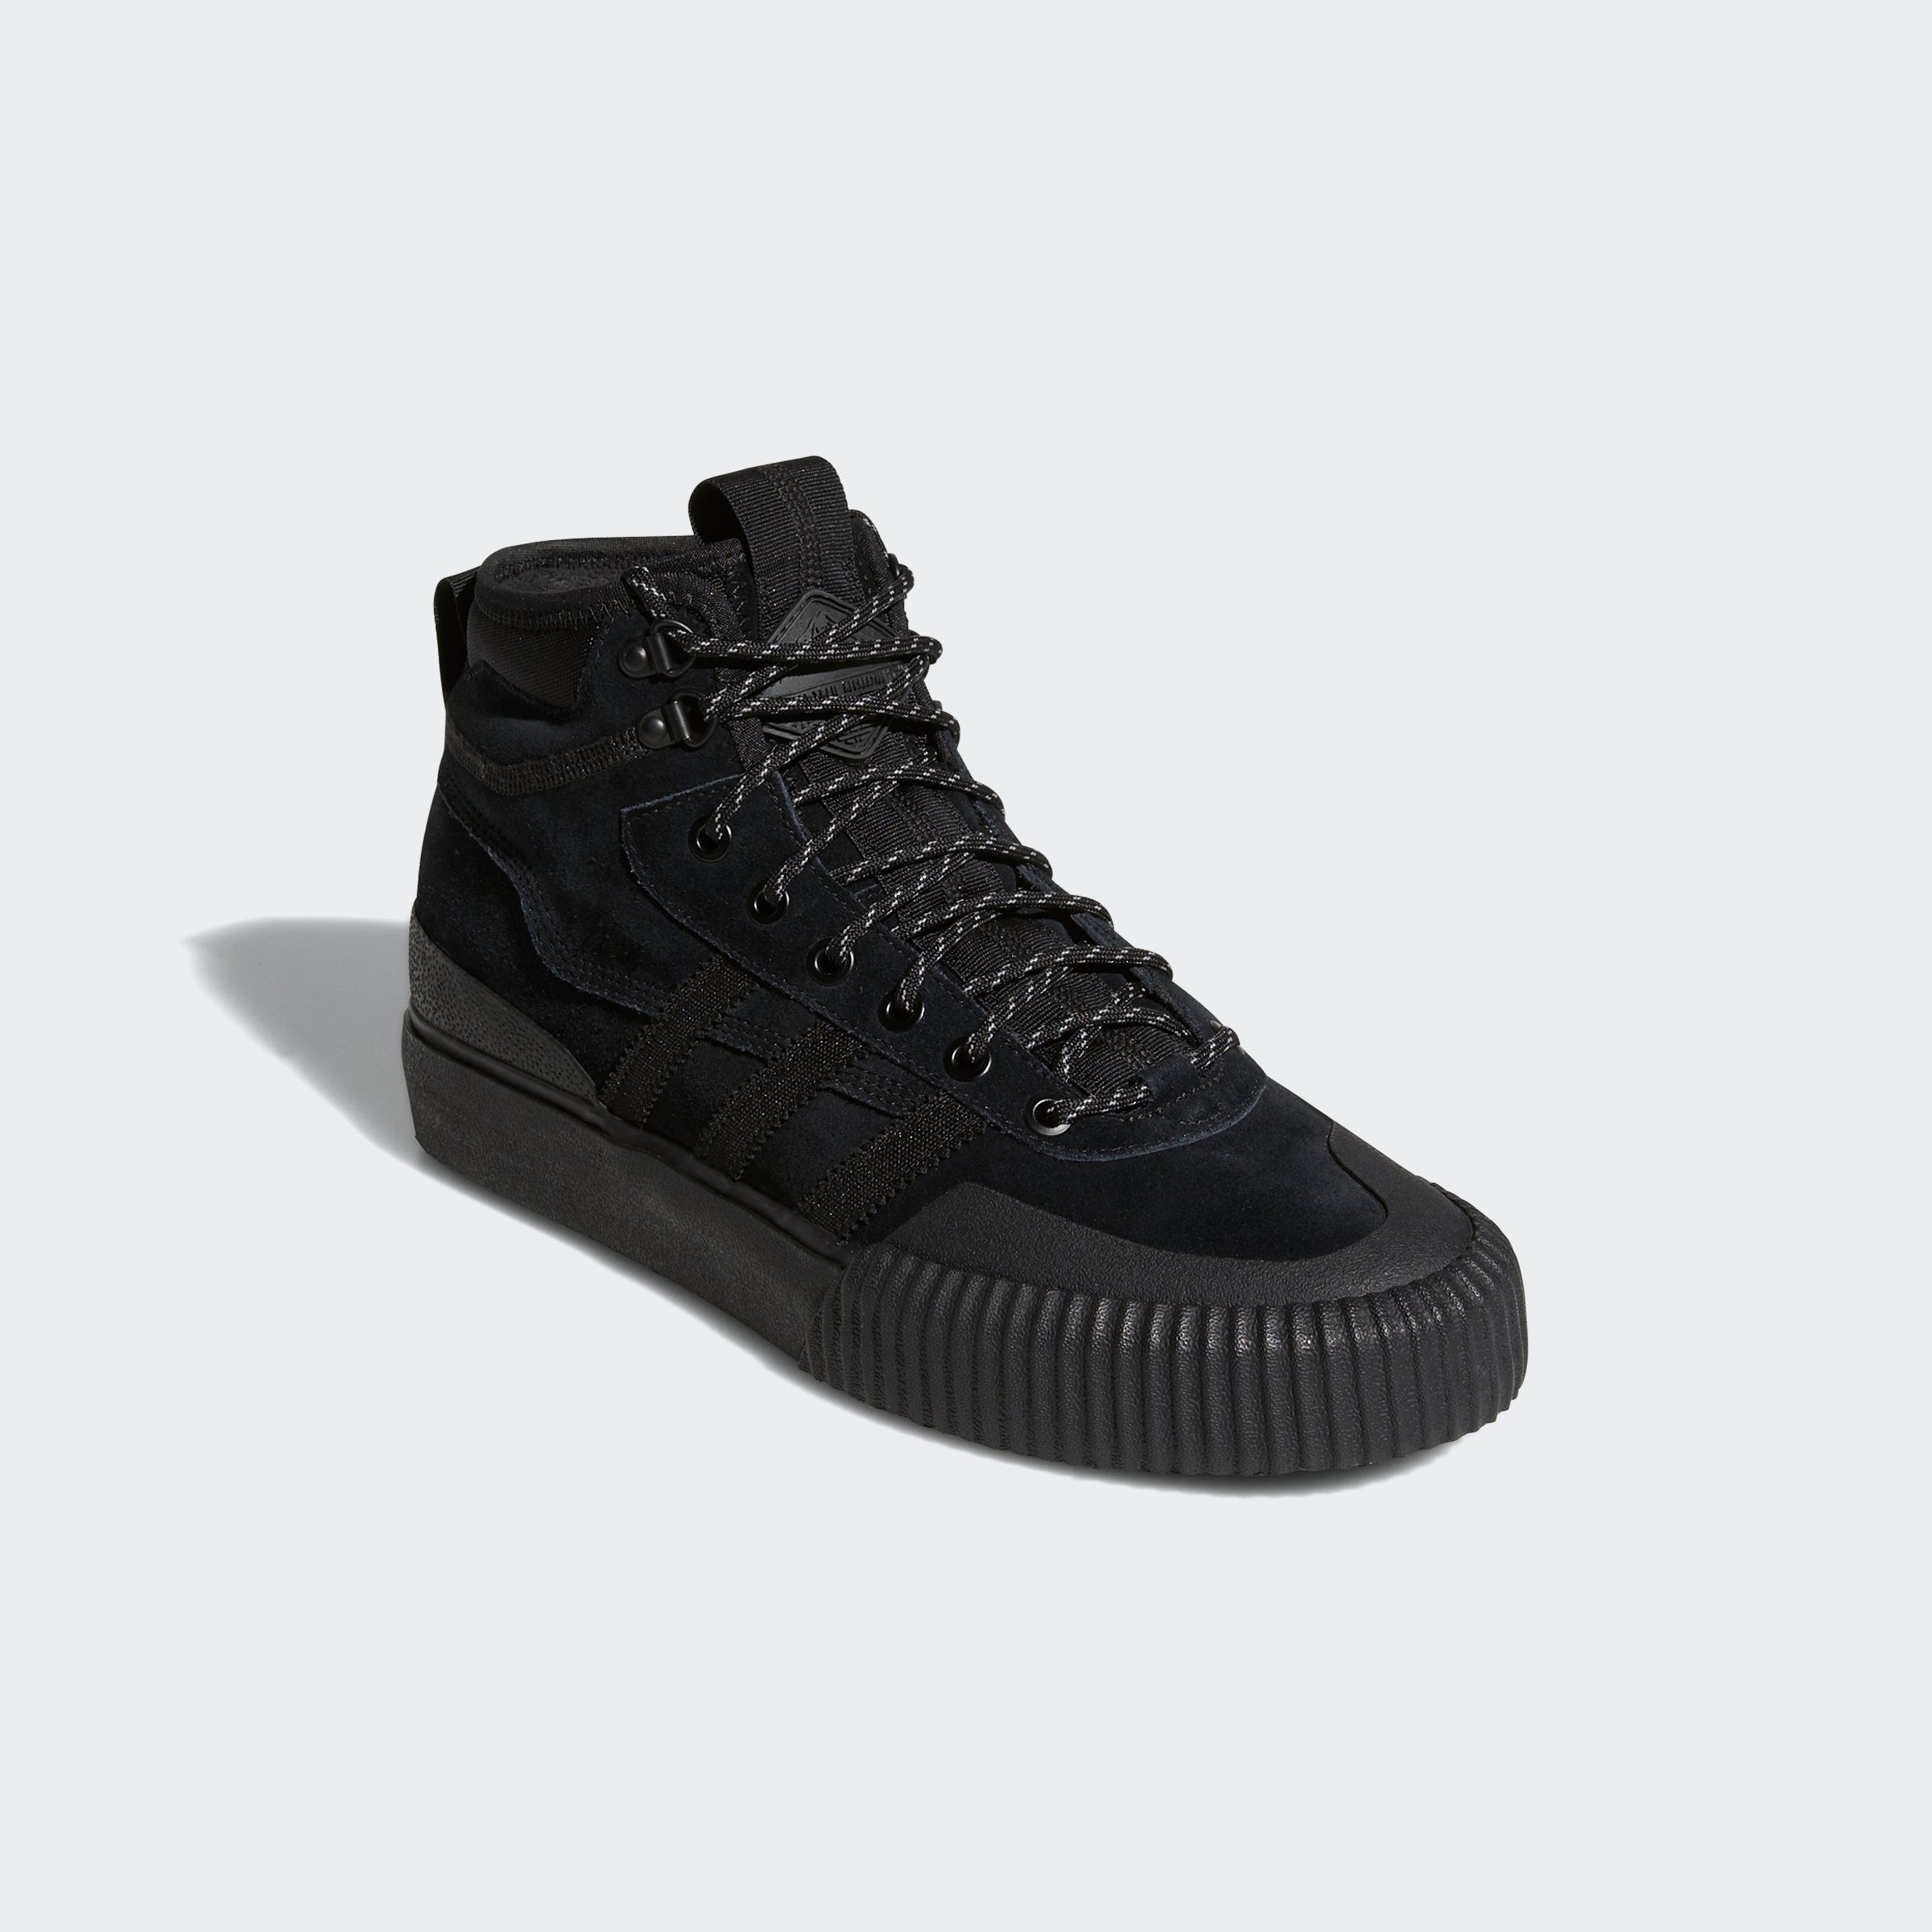 adidas Originals »AKANDO ATR« Sneaker online kaufen | OTTO